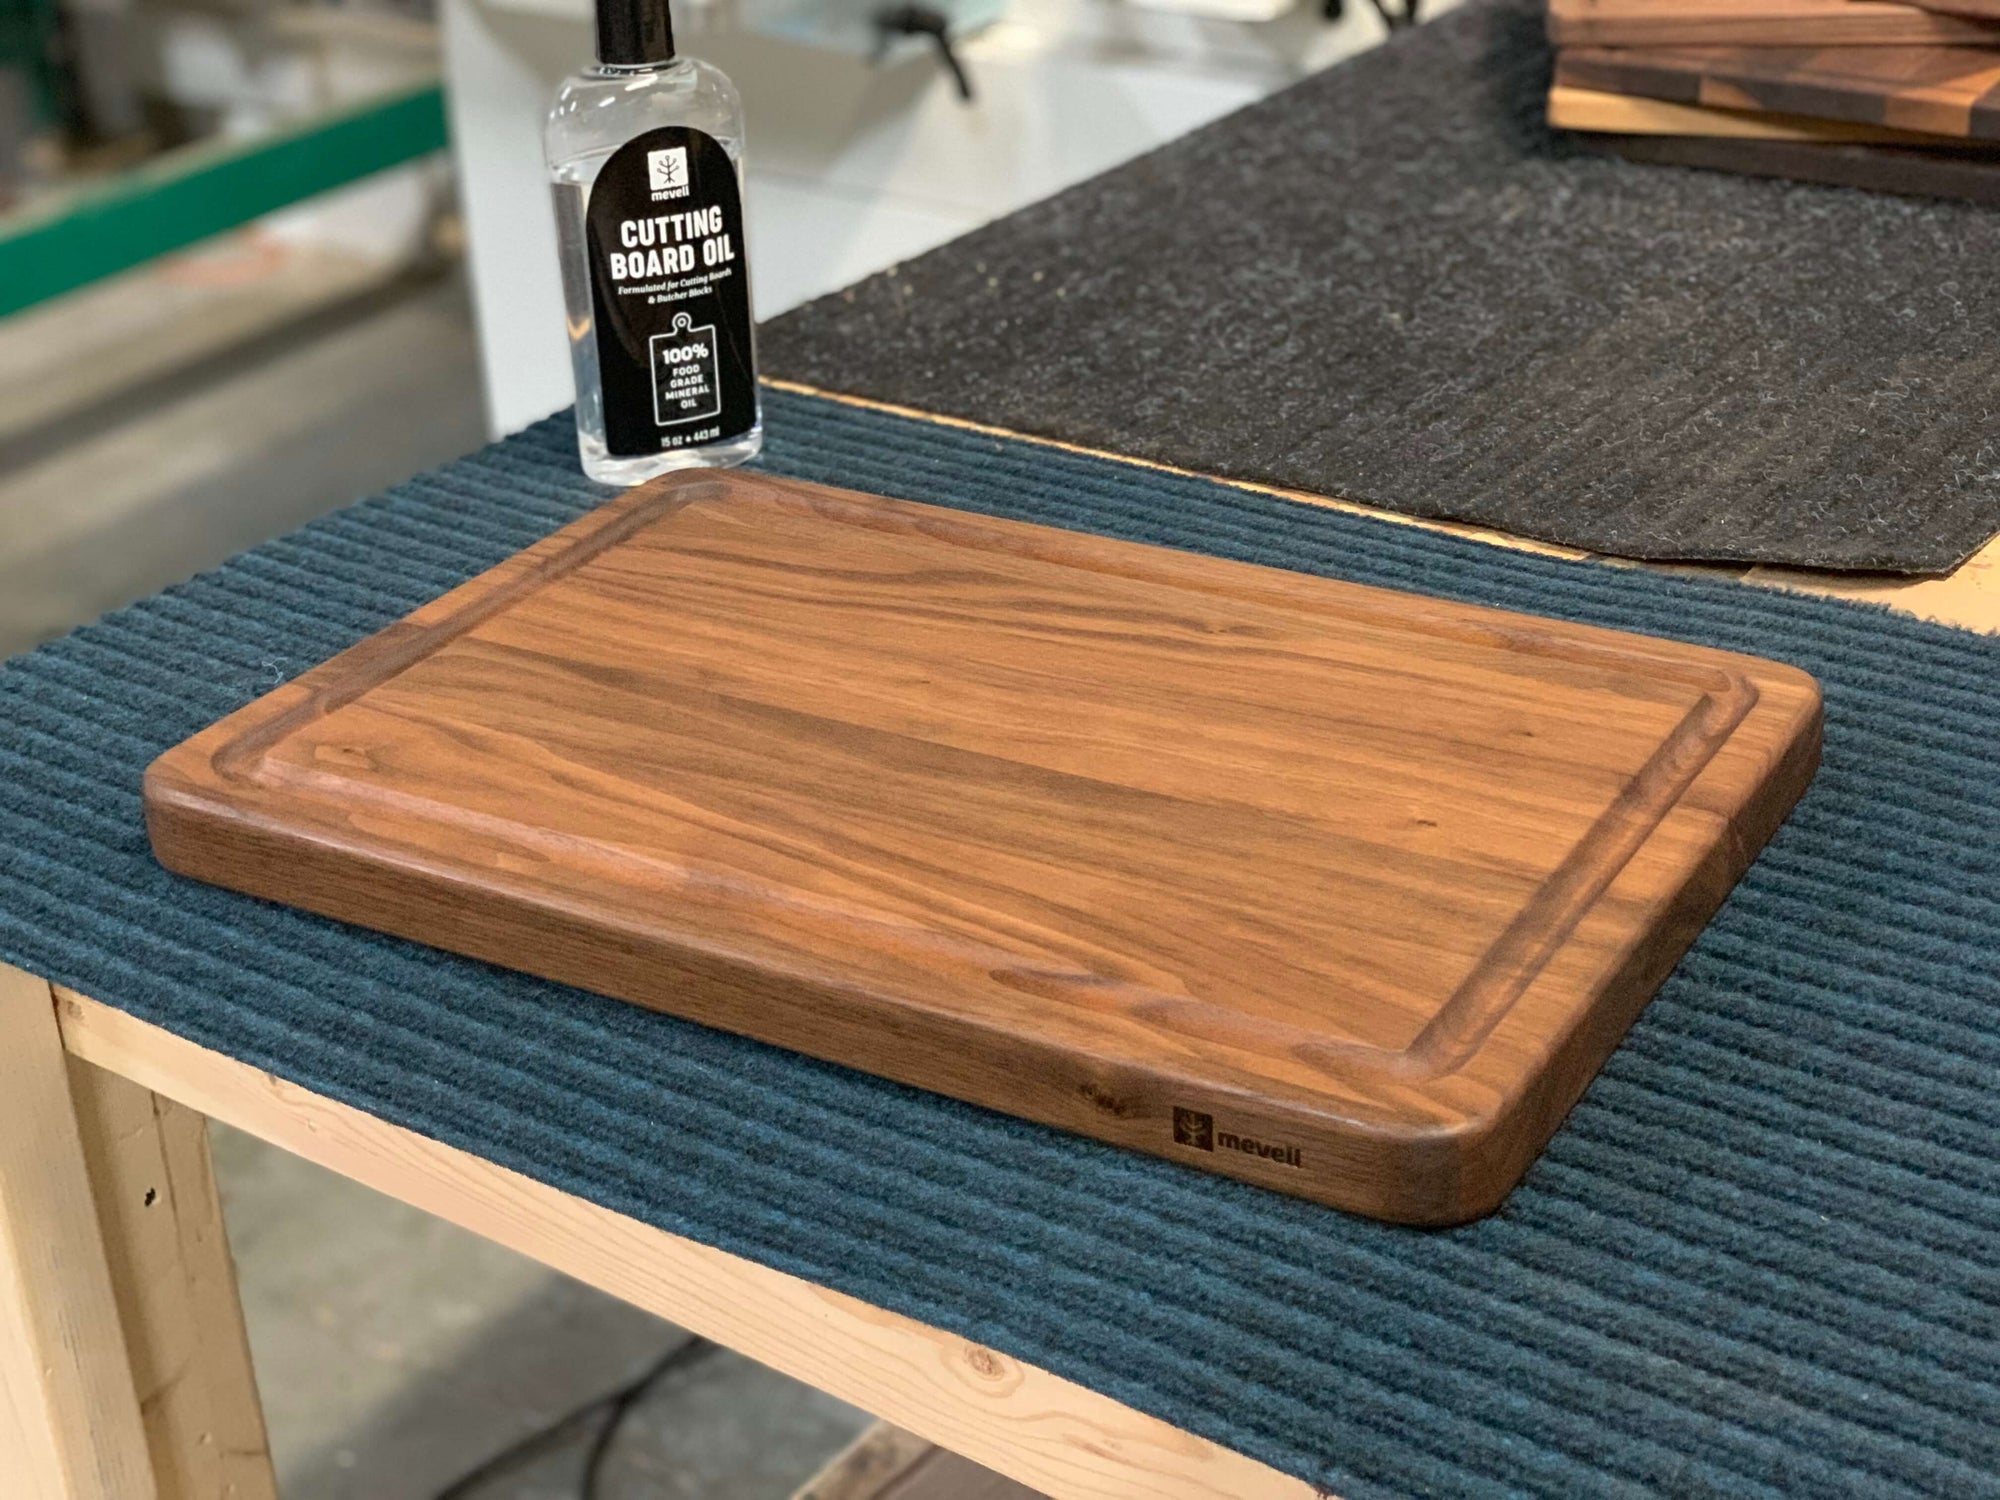 How to Season a Wood Cutting Board